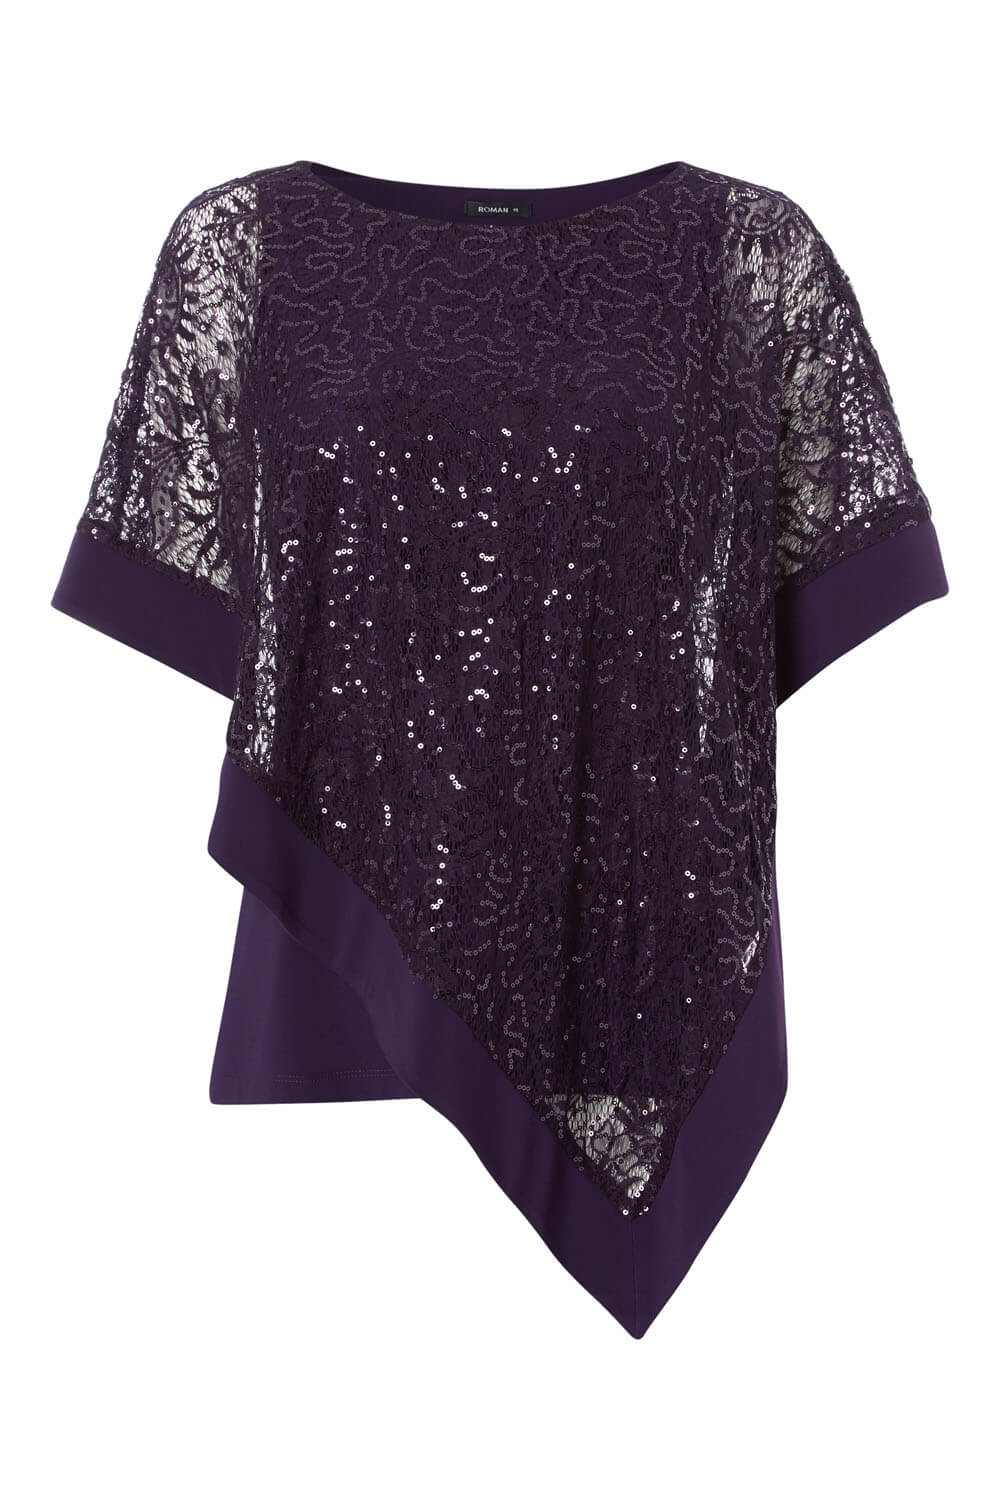 Purple Sequin Embellished Overlay Top, Image 5 of 5